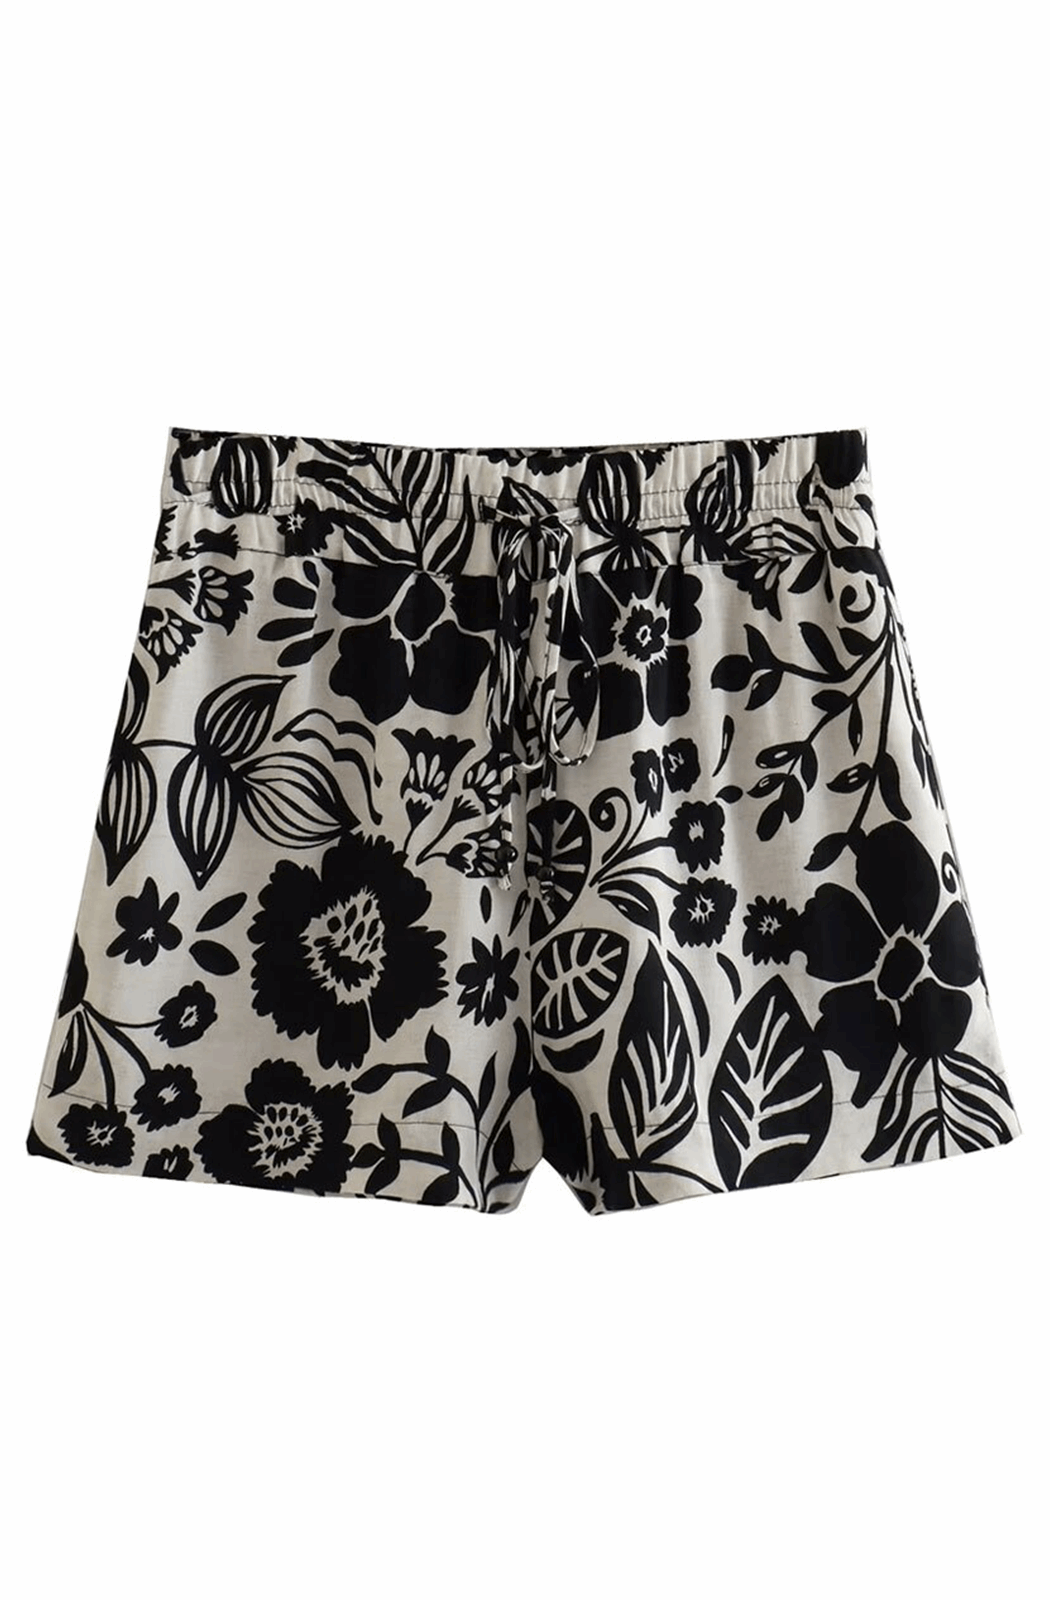 Floral print top and shorts set